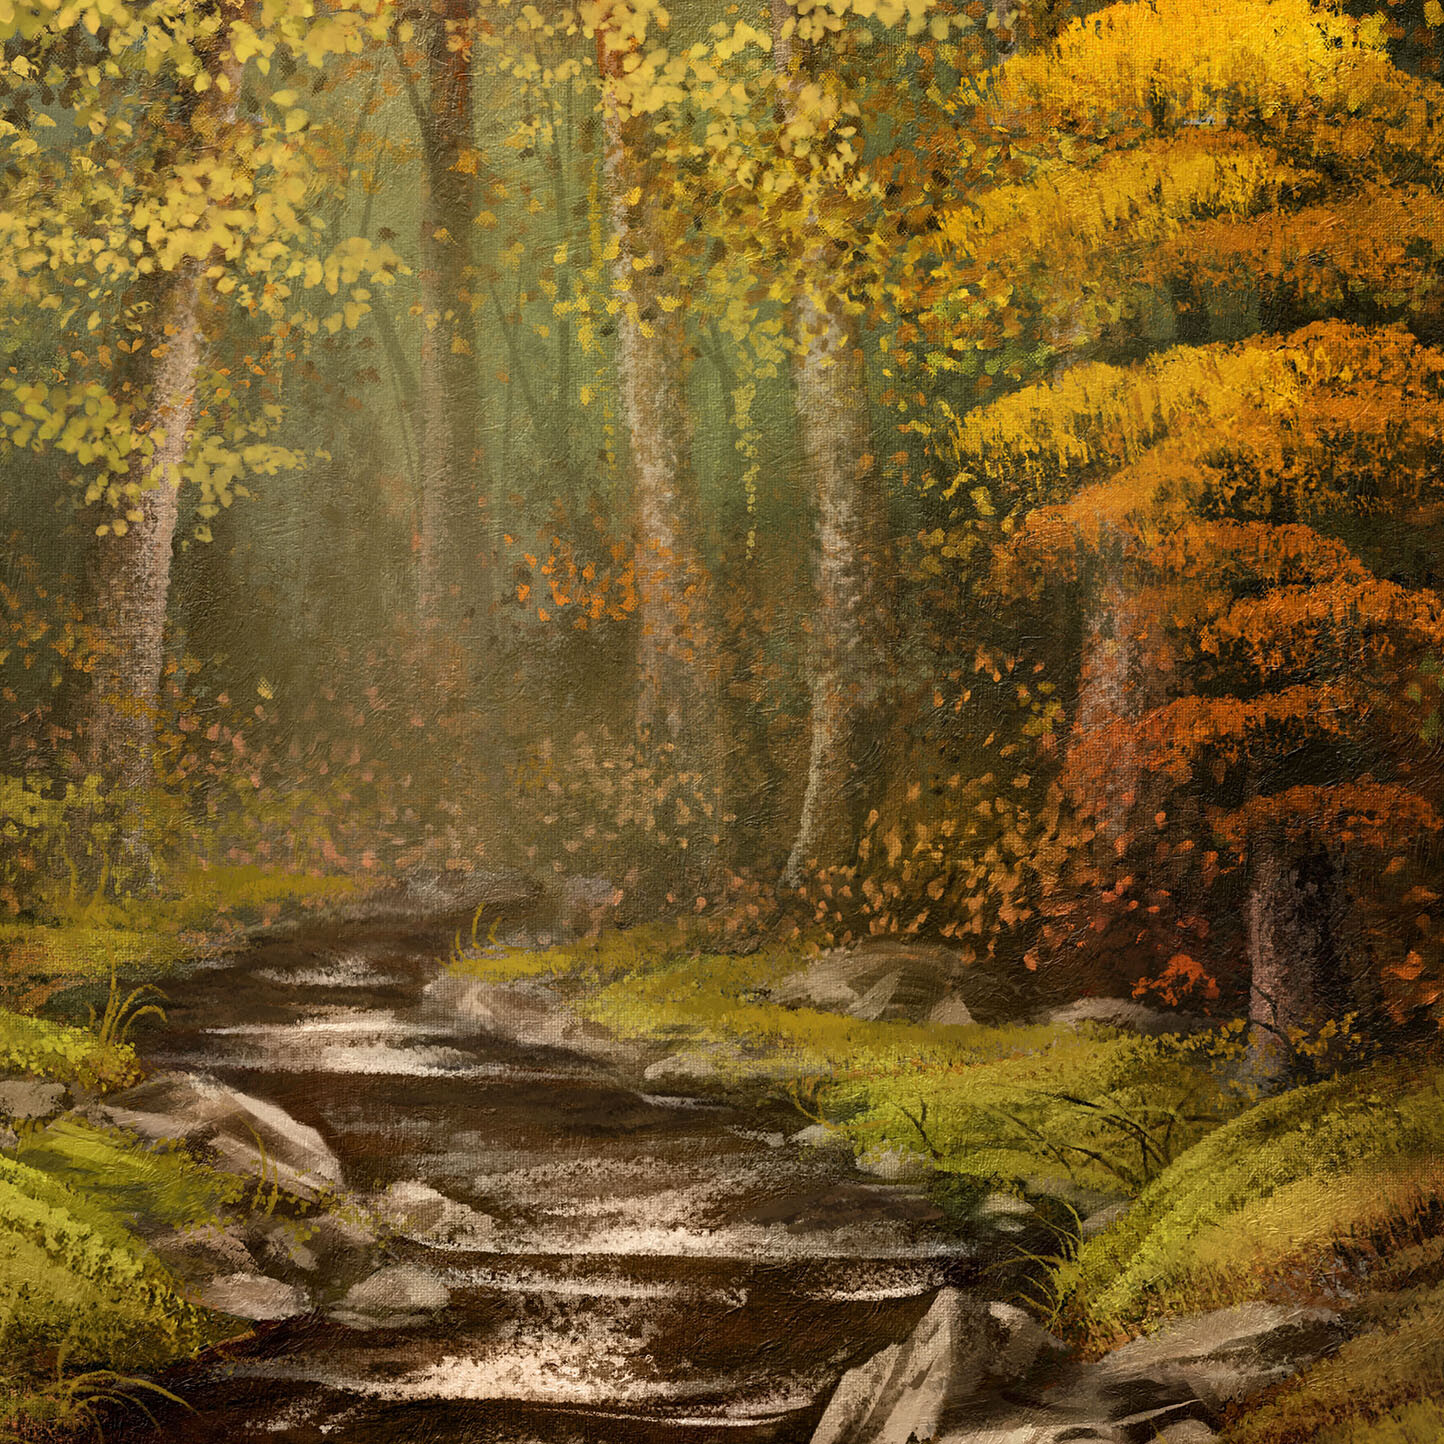 "Autumn River" Digital Fine Art Landscape/Scenery Painting